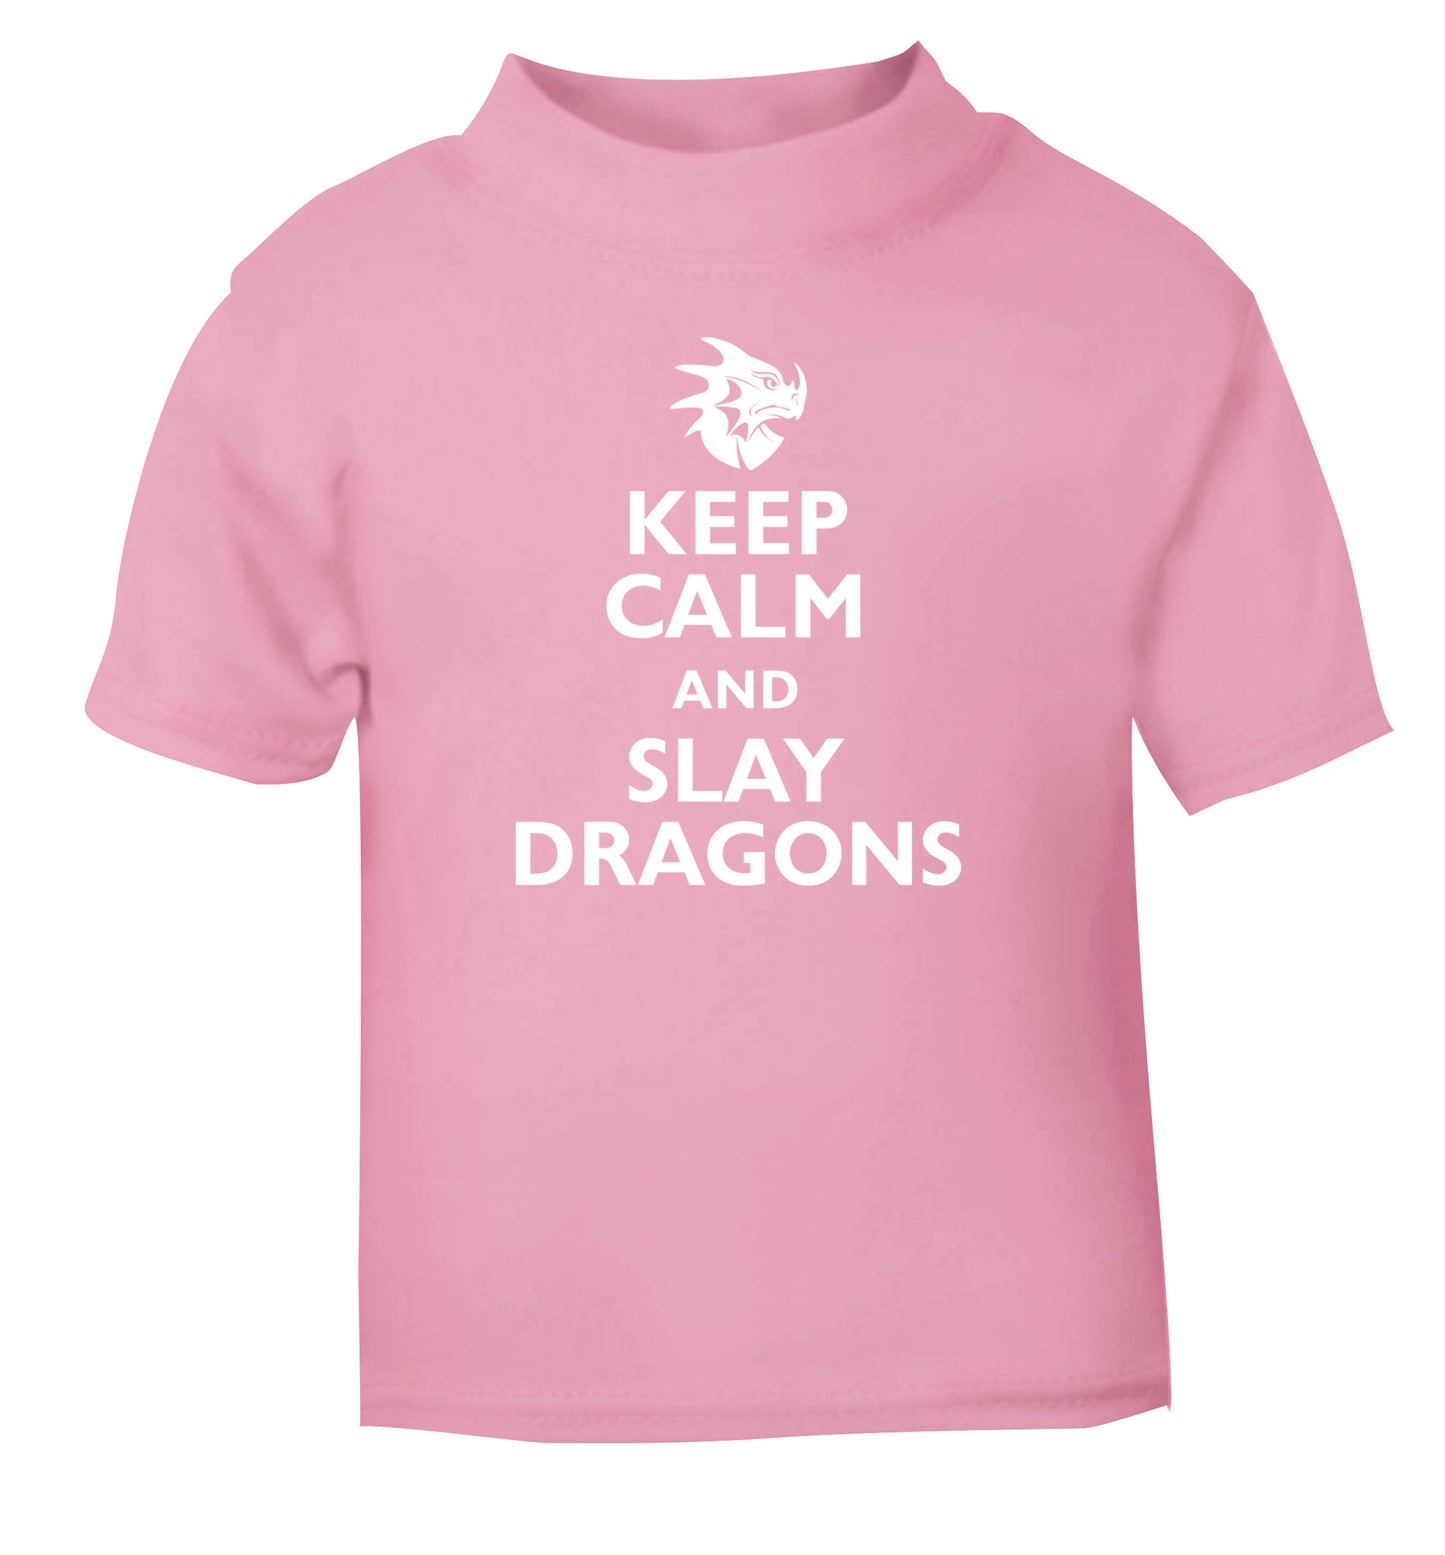 Keep calm and slay dragons light pink Baby Toddler Tshirt 2 Years